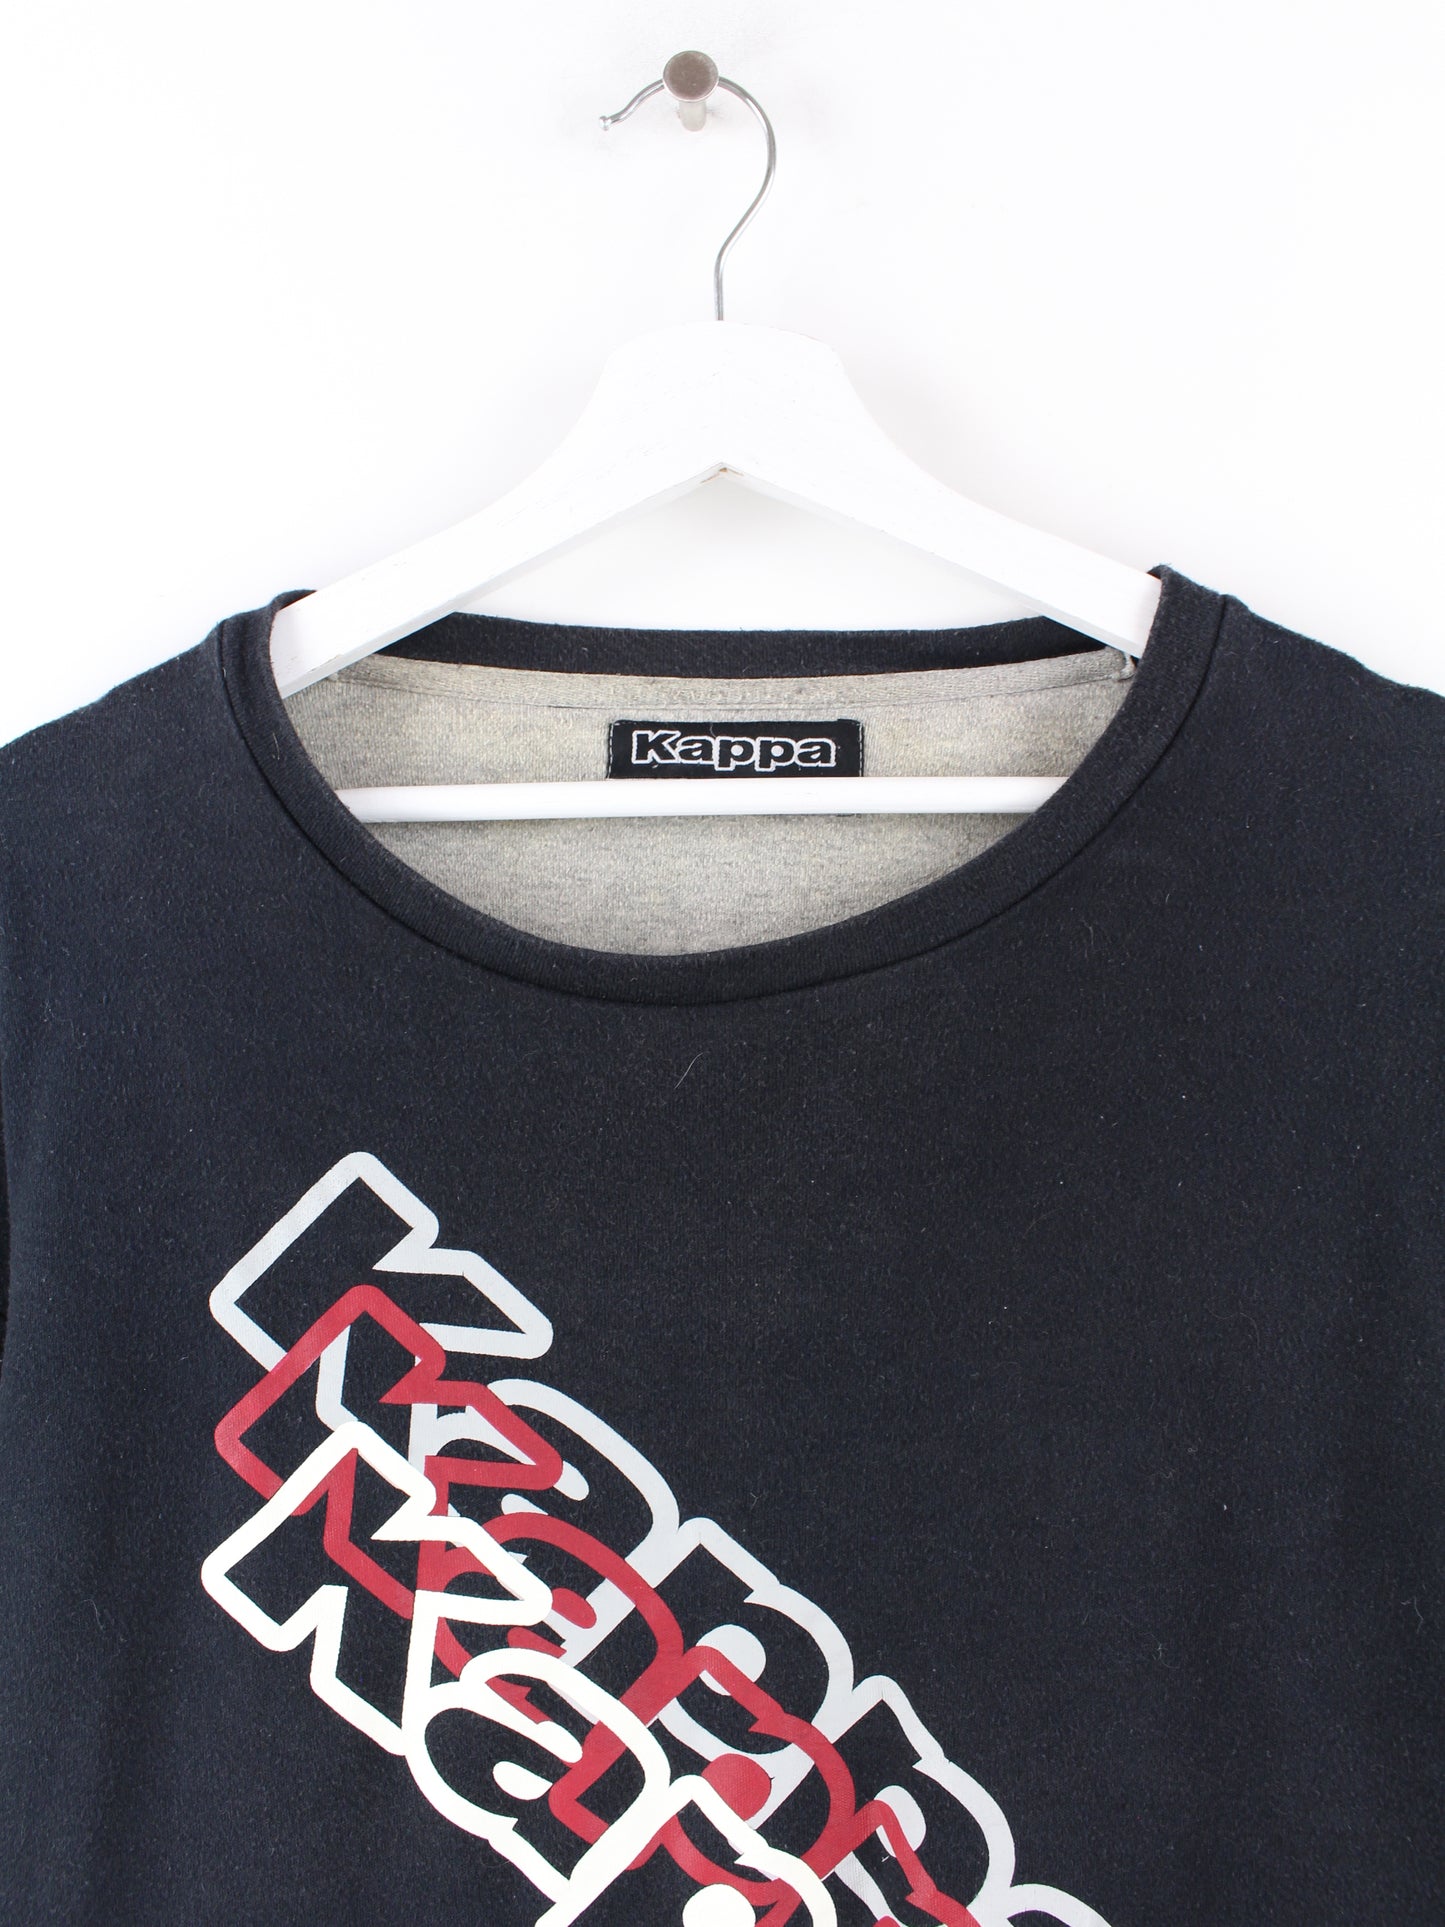 Kappa Print Sweatshirt Black XL